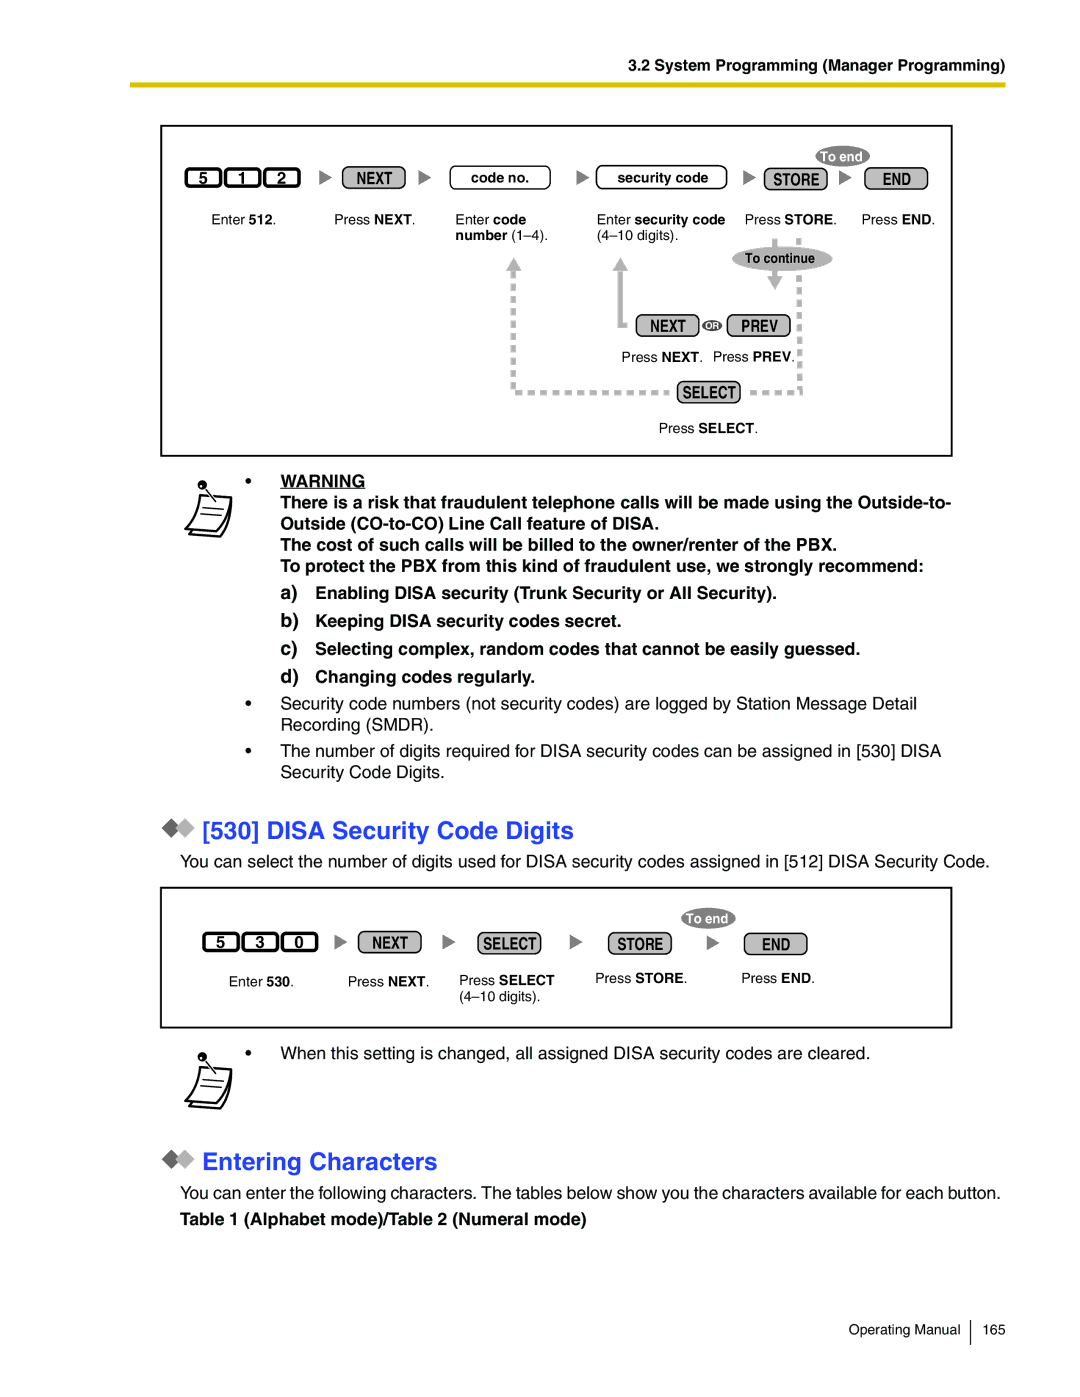 Panasonic KX-TA824 manual Disa Security Code Digits, Entering Characters, Alphabet mode/ Numeral mode 